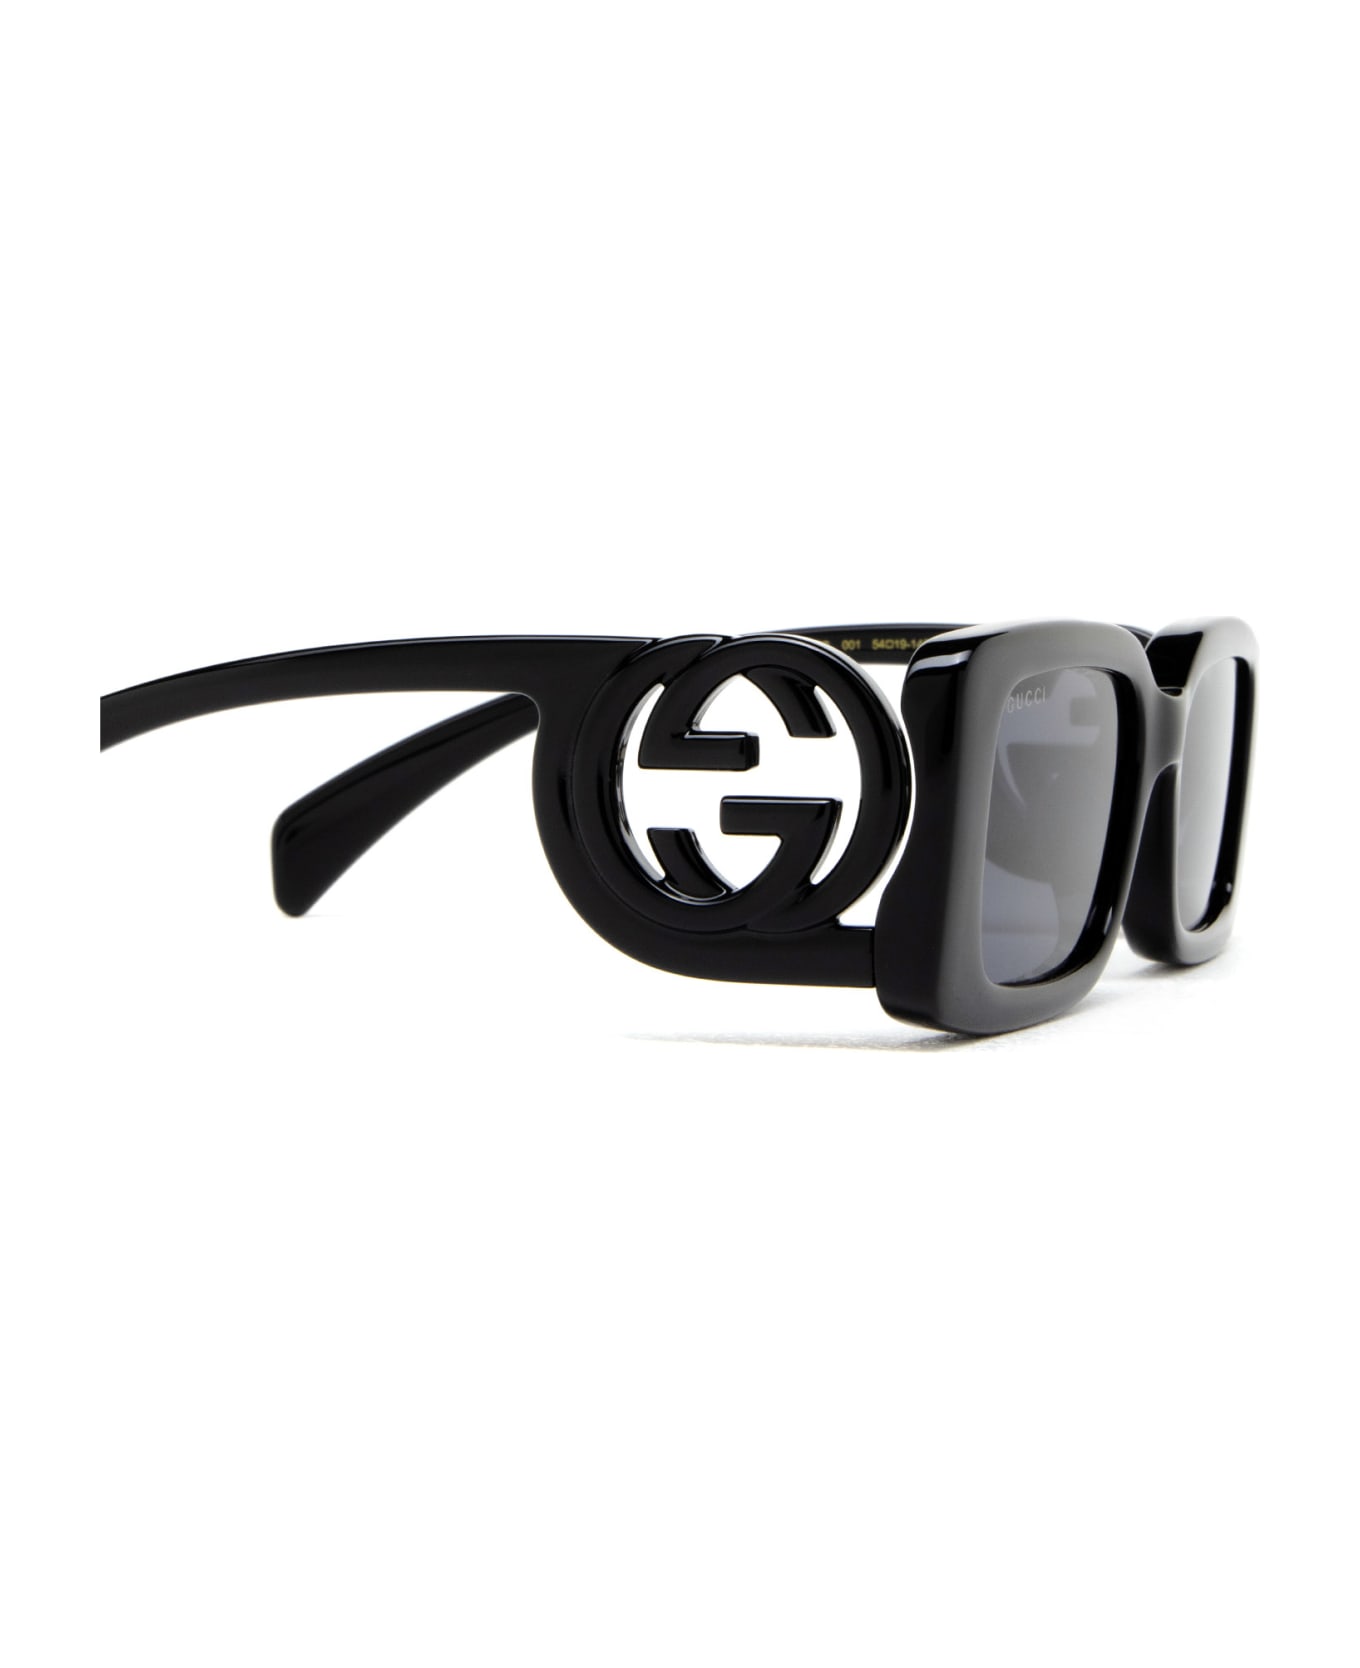 Gucci Eyewear Gg1325s Black Sunglasses - Black